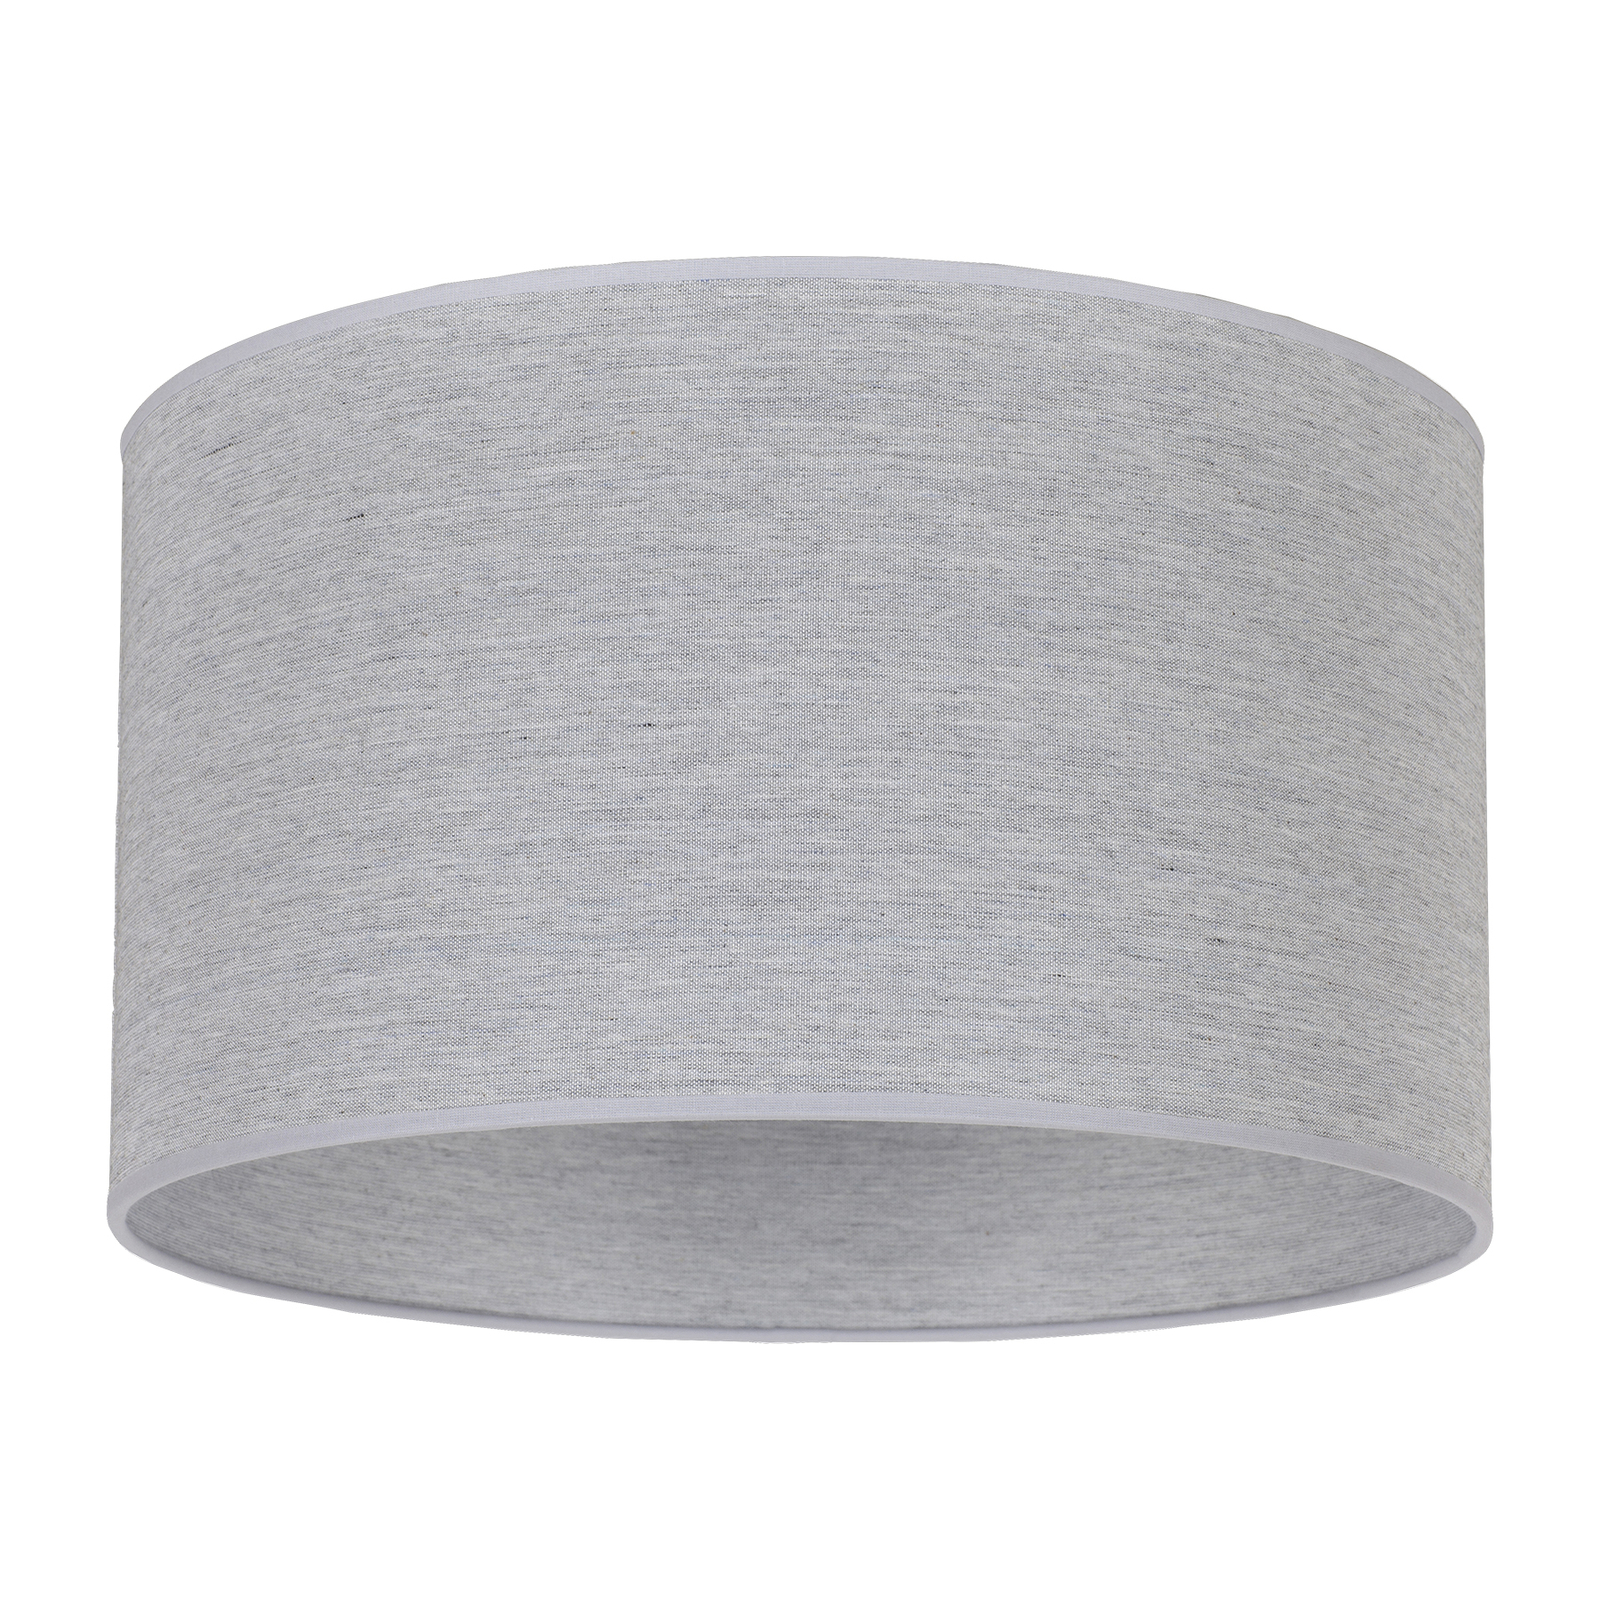 Roller lampshade, grey, Ø 50 cm, height 30 cm